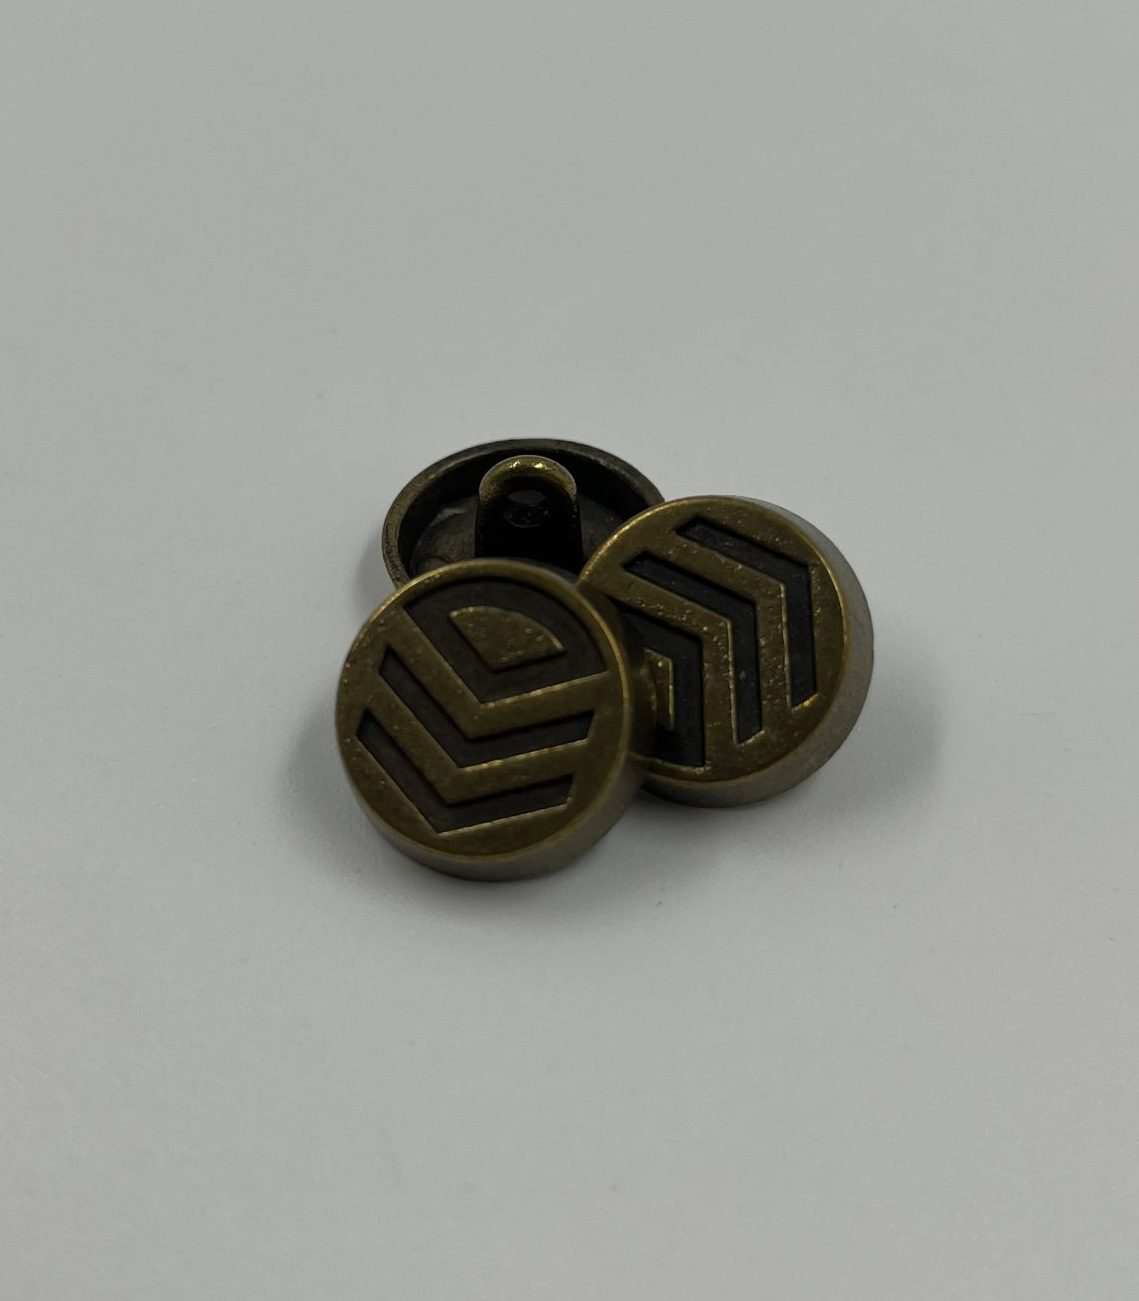 Coat button metal with chevron design